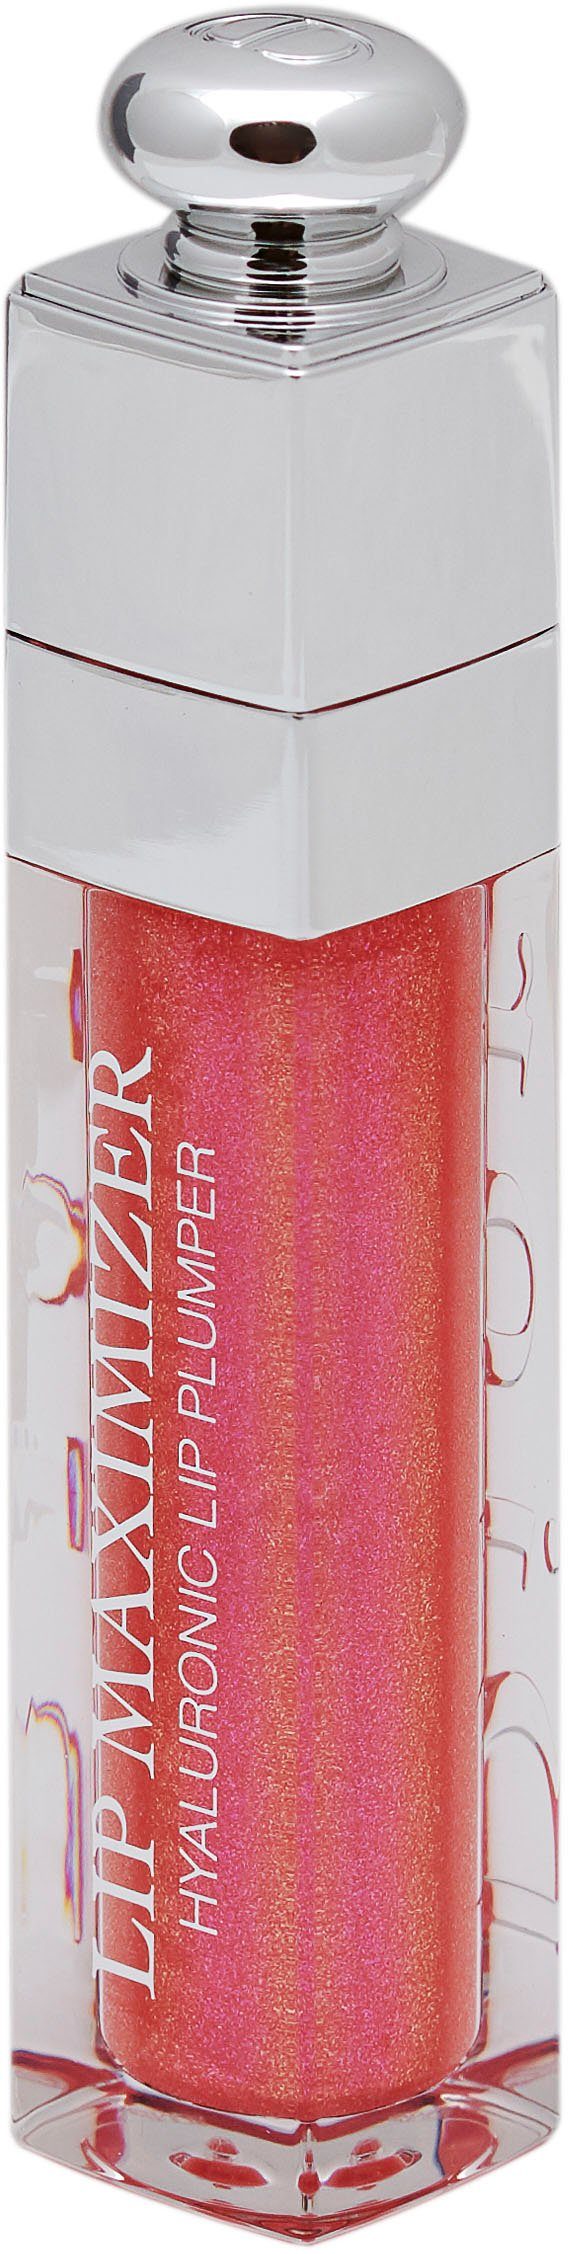 Holo Lipgloss Maximizer Dior Addict Pink 010 Lip